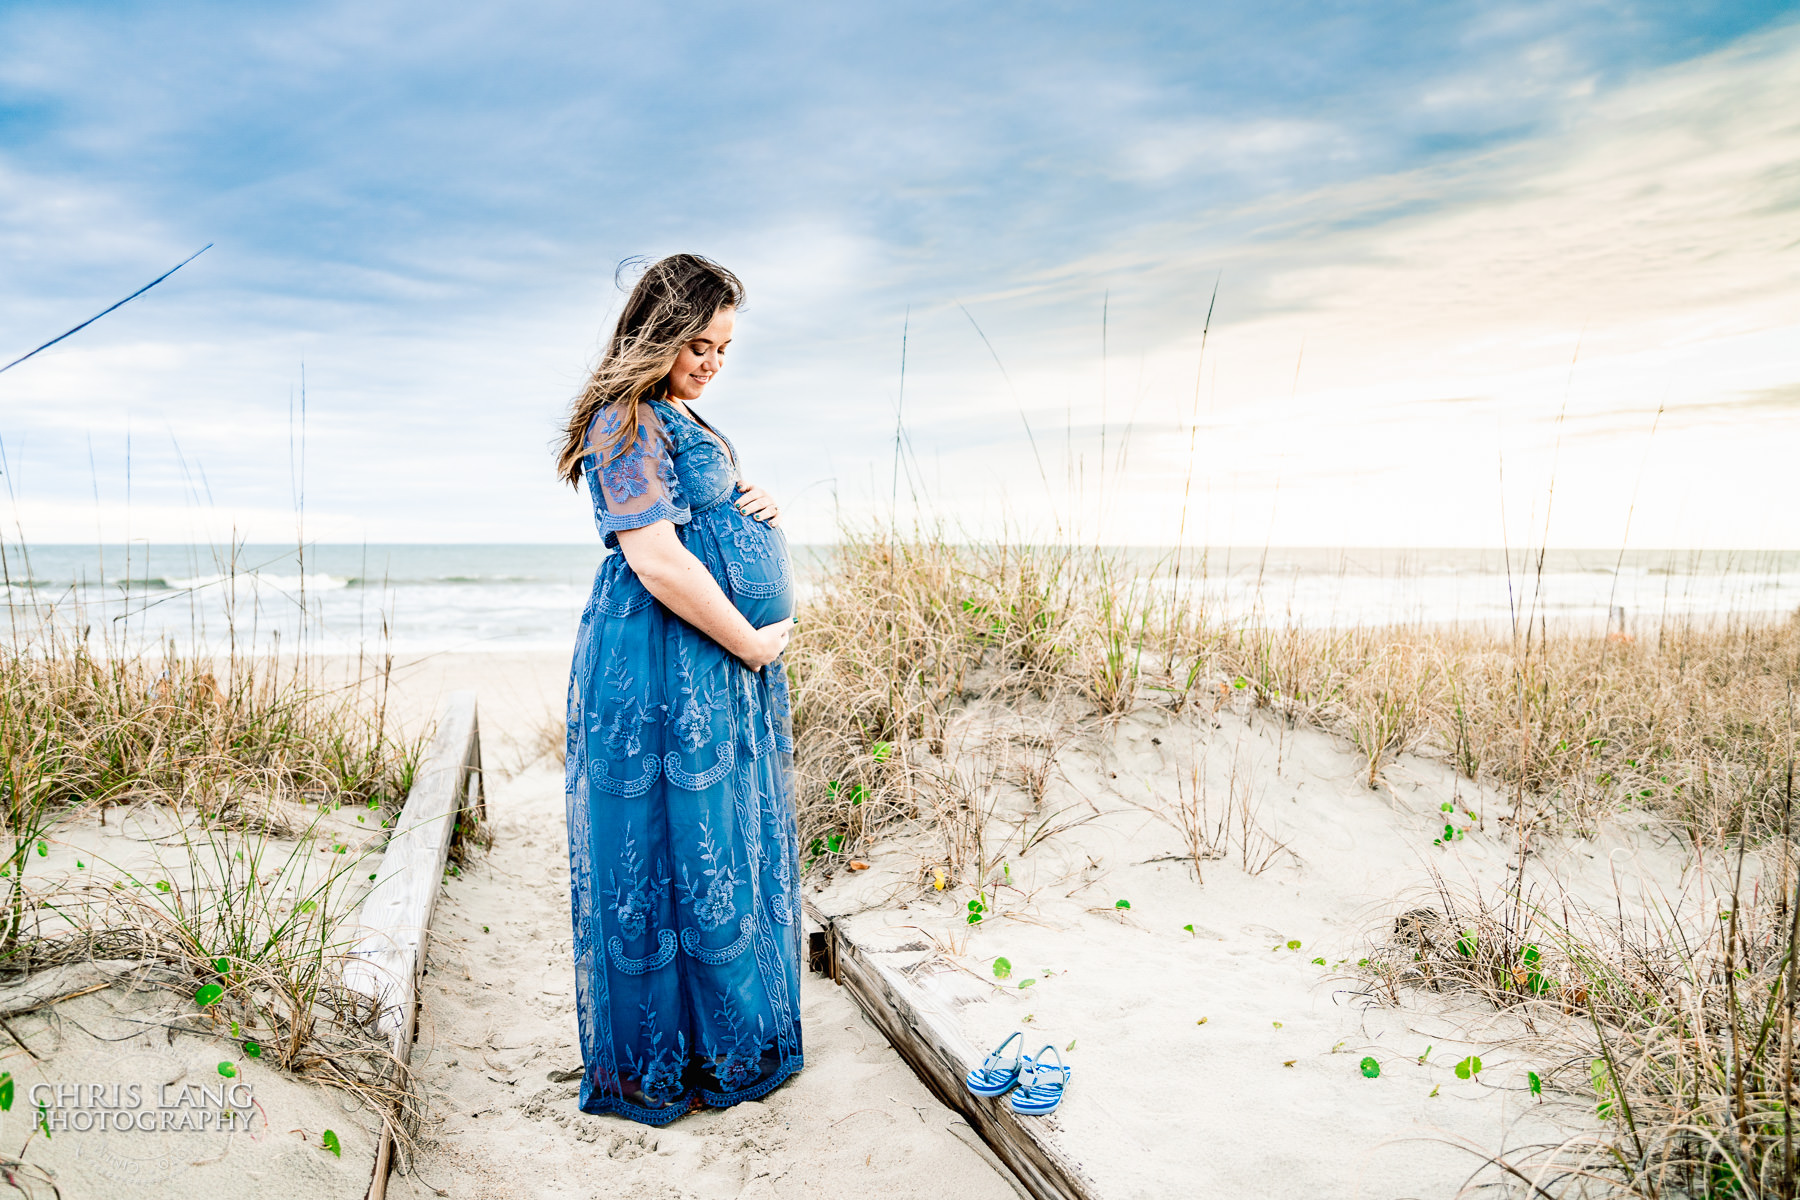  Coastal maternity session - blue maternity dress - baby bump photo -  Wilmington NC maternity photographers - Chris Lang Photography -  pregnancy photos -  maternity photo ideas - 